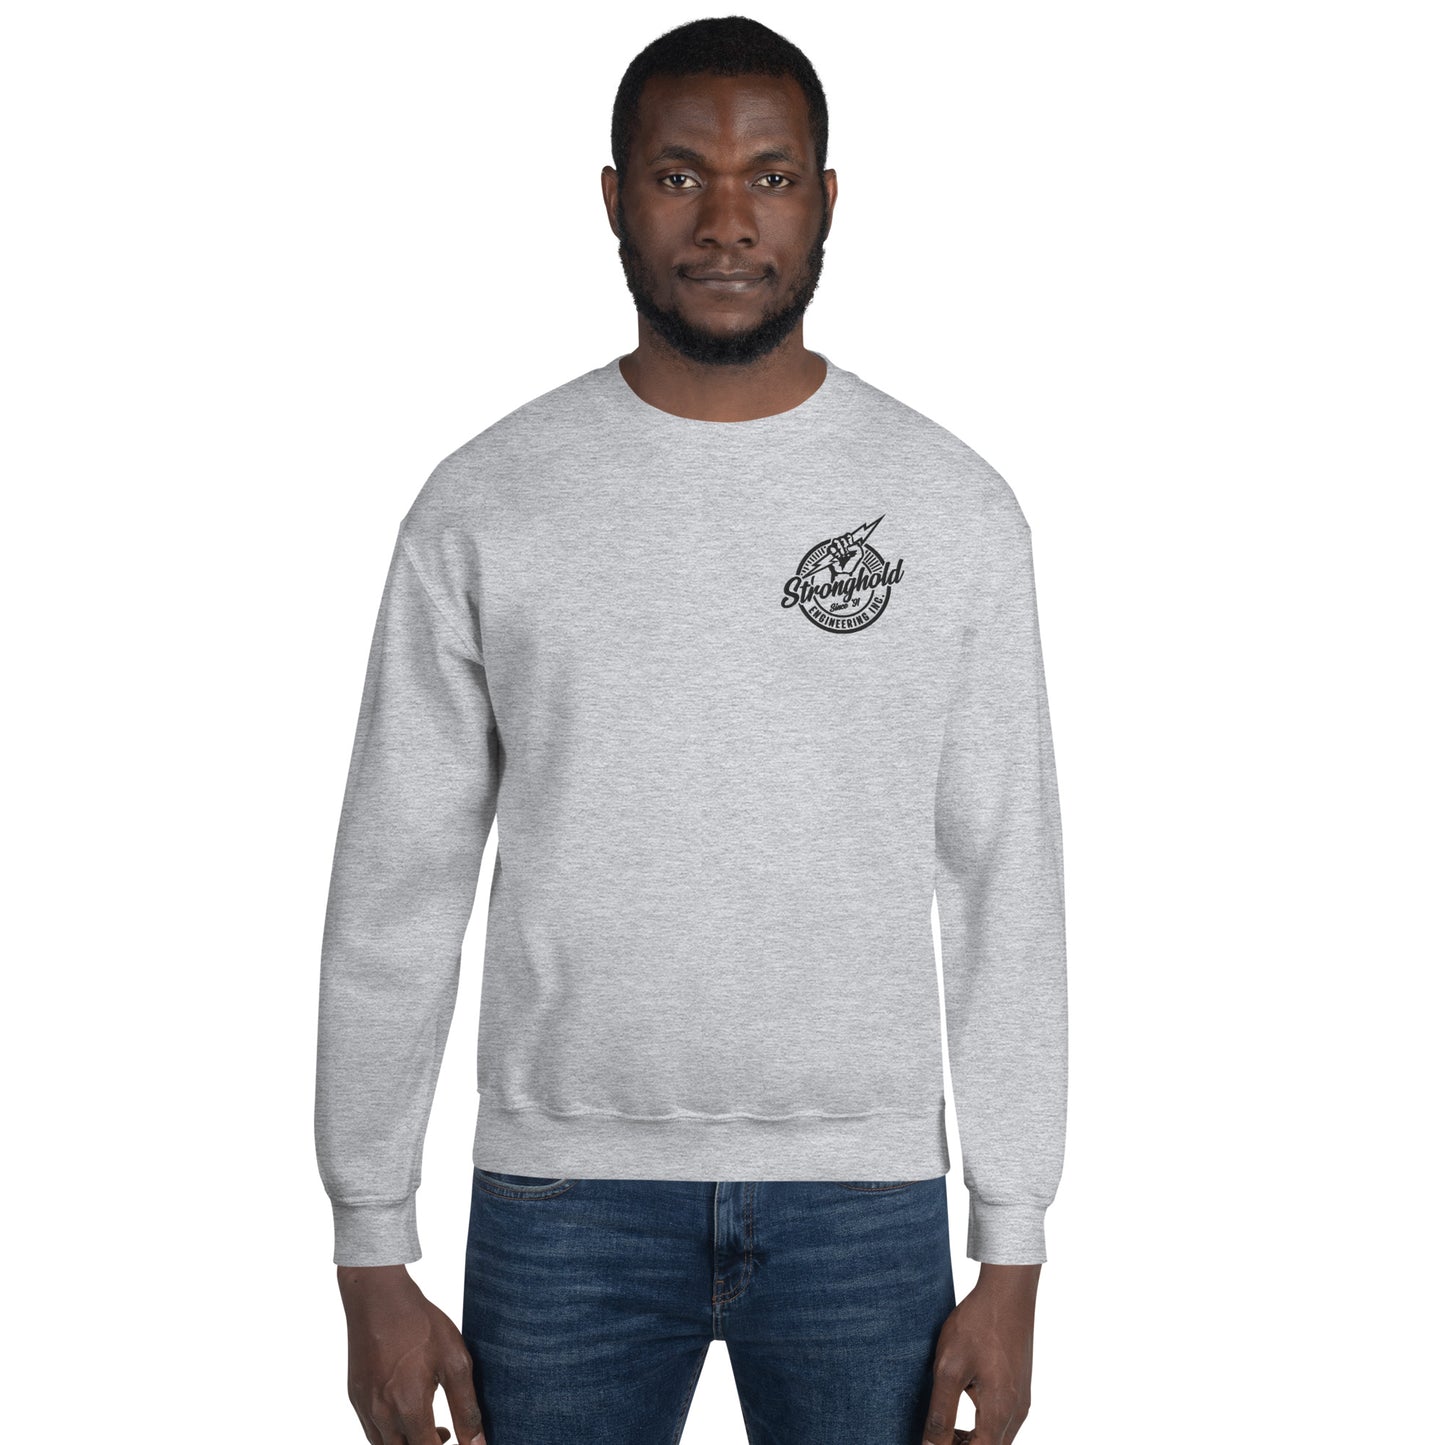 Unisex Value Sweatshirt